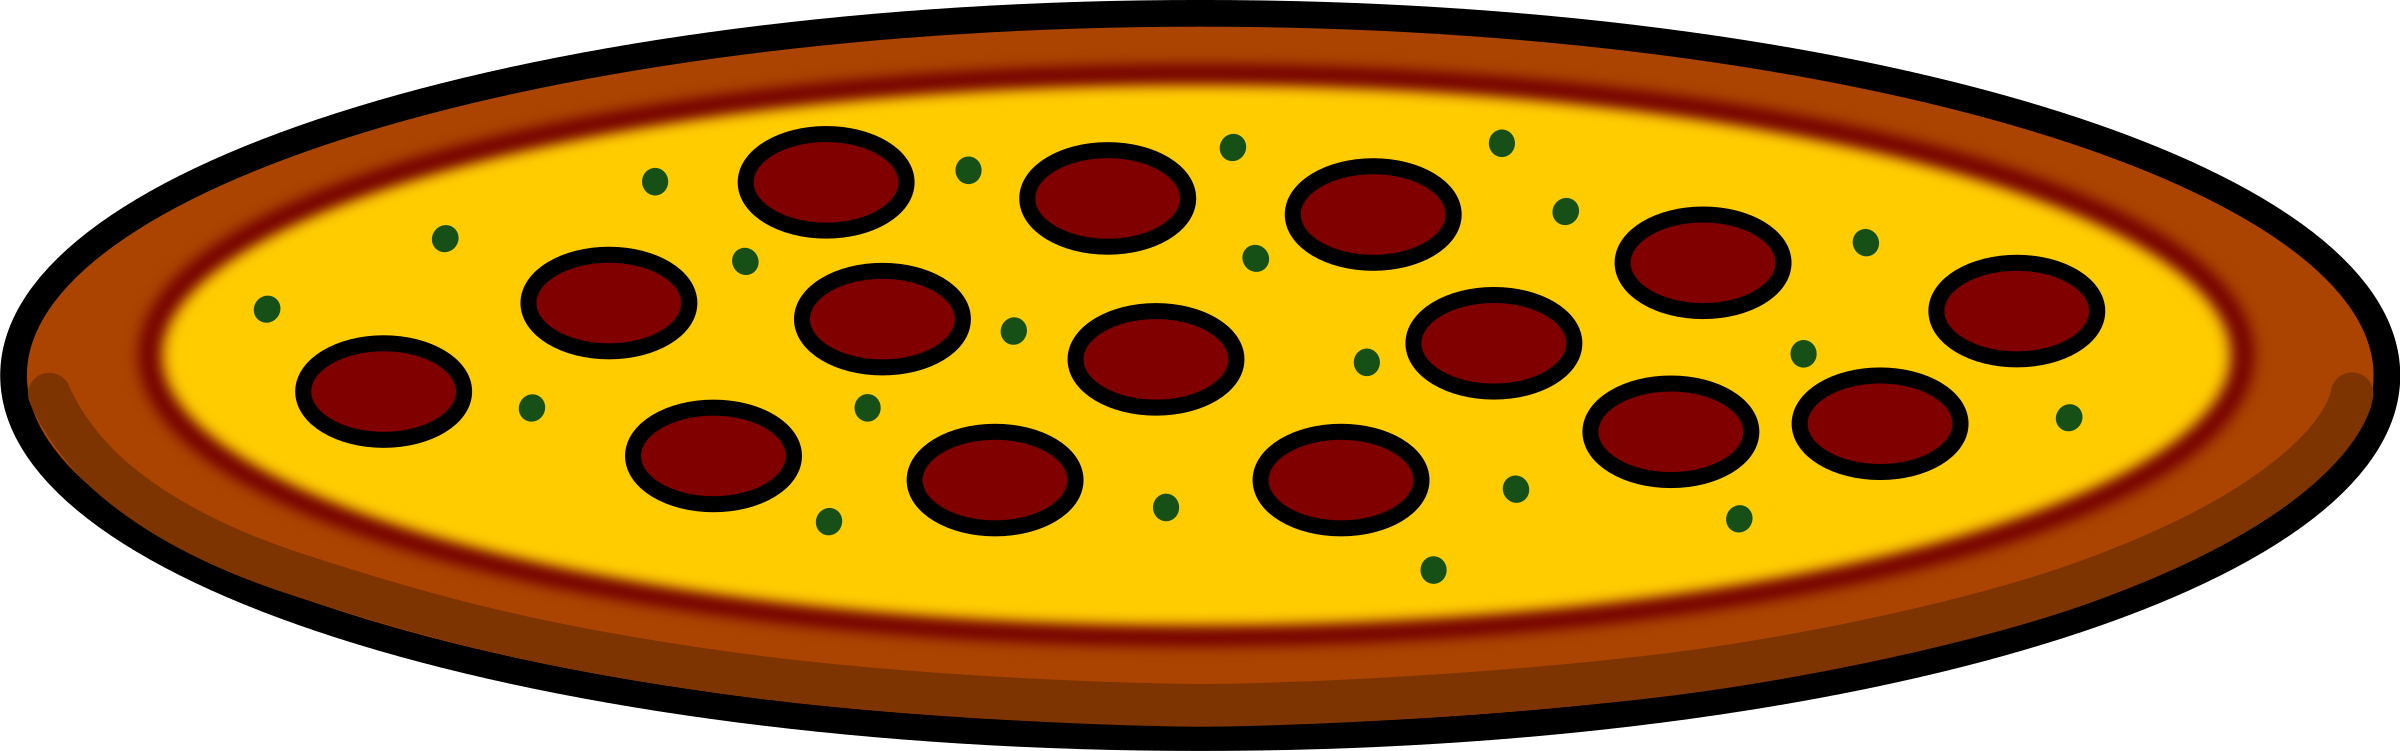 Pepperoni Pizza By Cwleonard